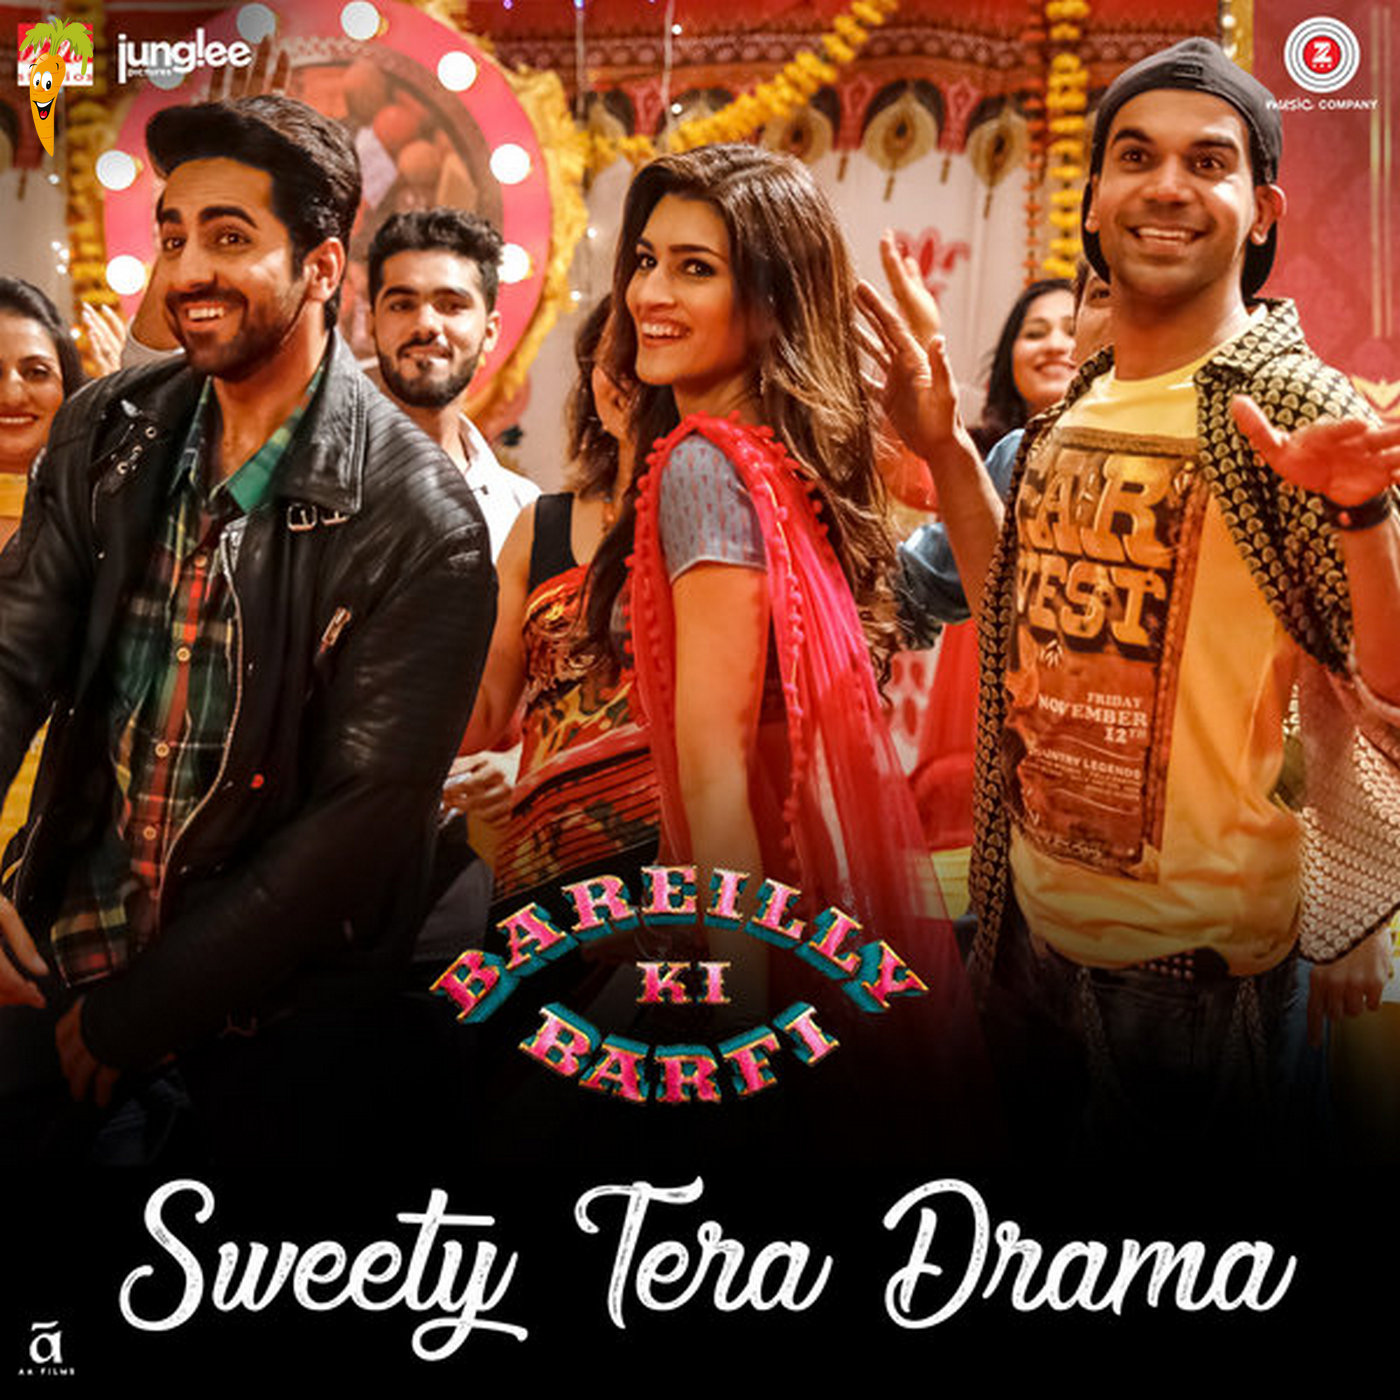 Sweety Tera Drama (From Bareilly Ki Barfi) - Single.jpg